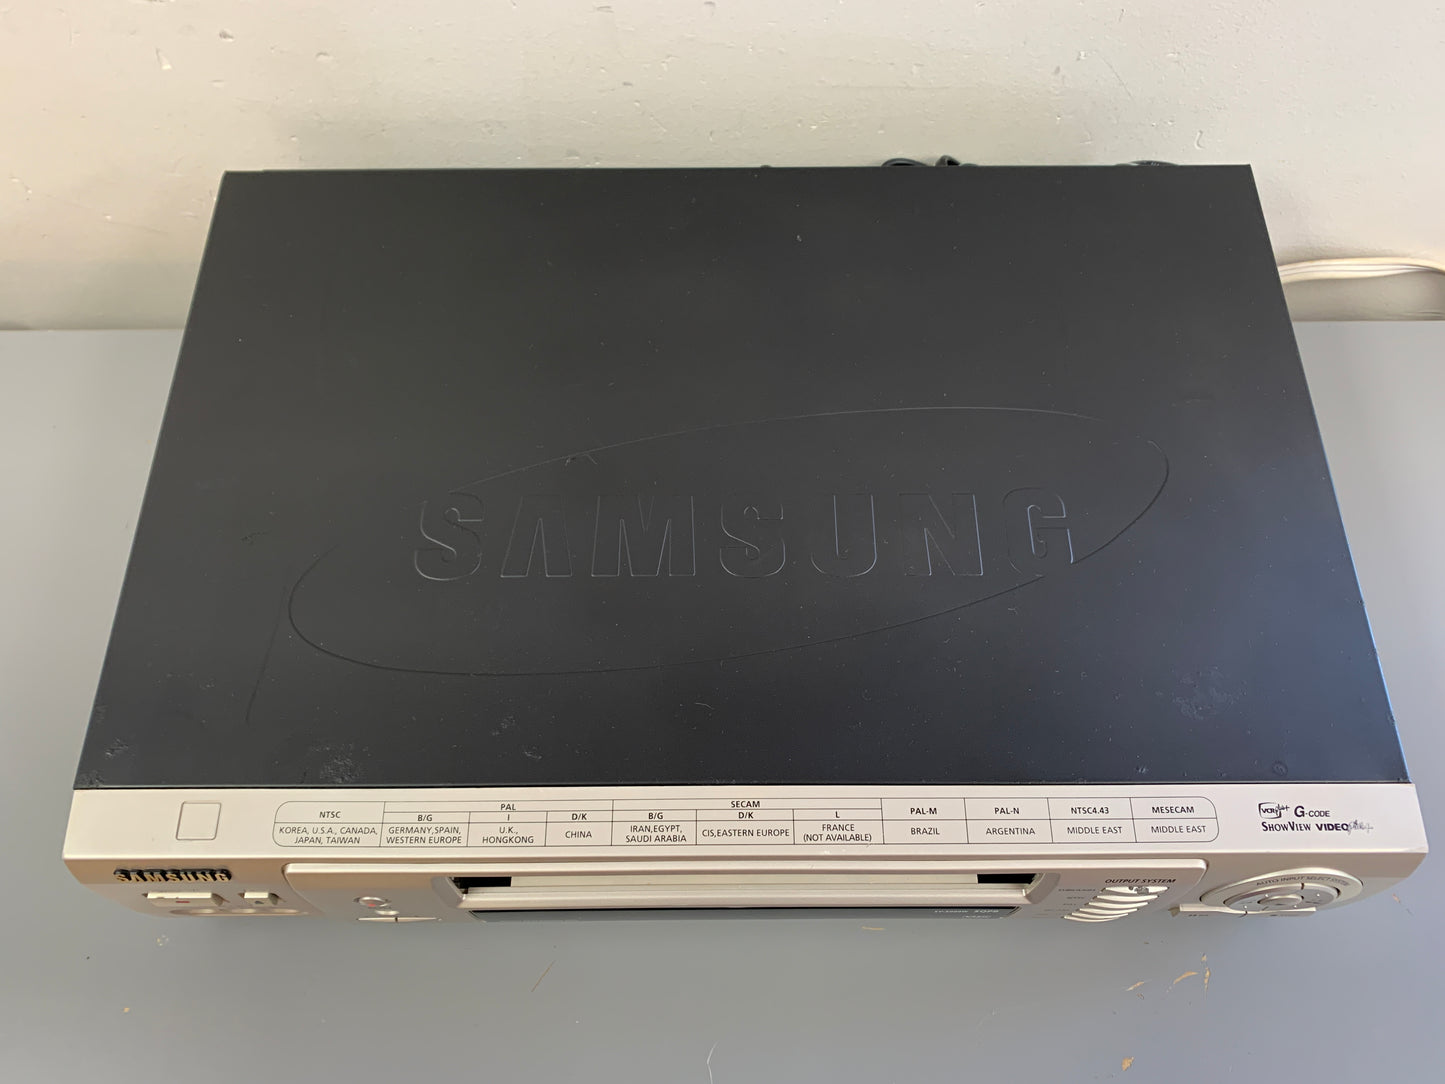 Samsung SV-5000W Worldwide VHS Player